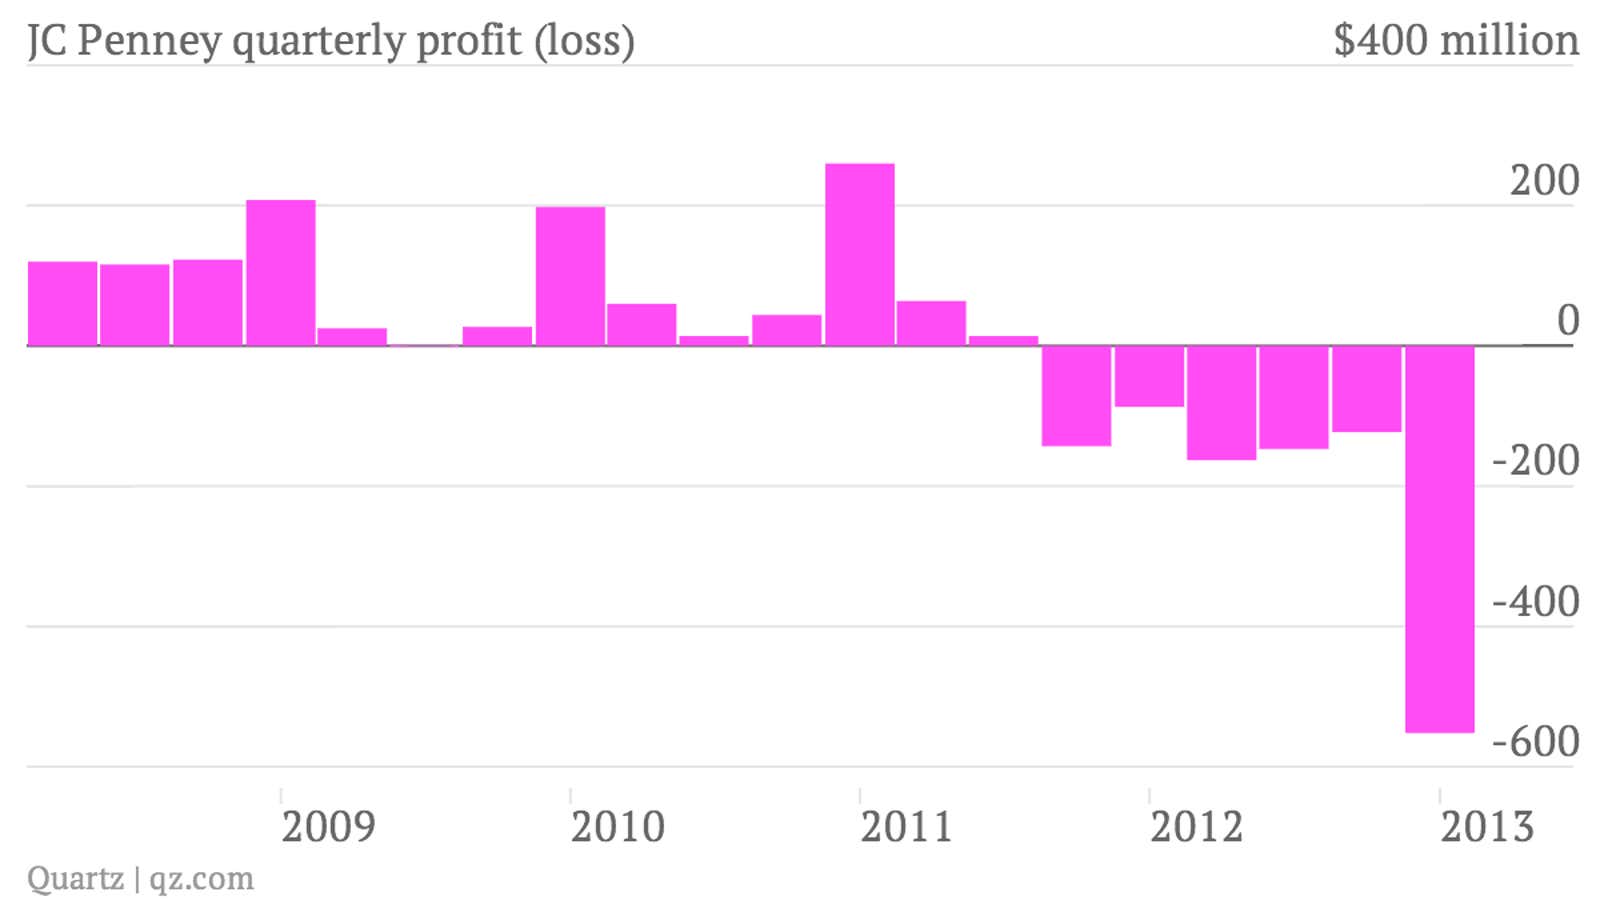 JCP Penney quarterly profit loss